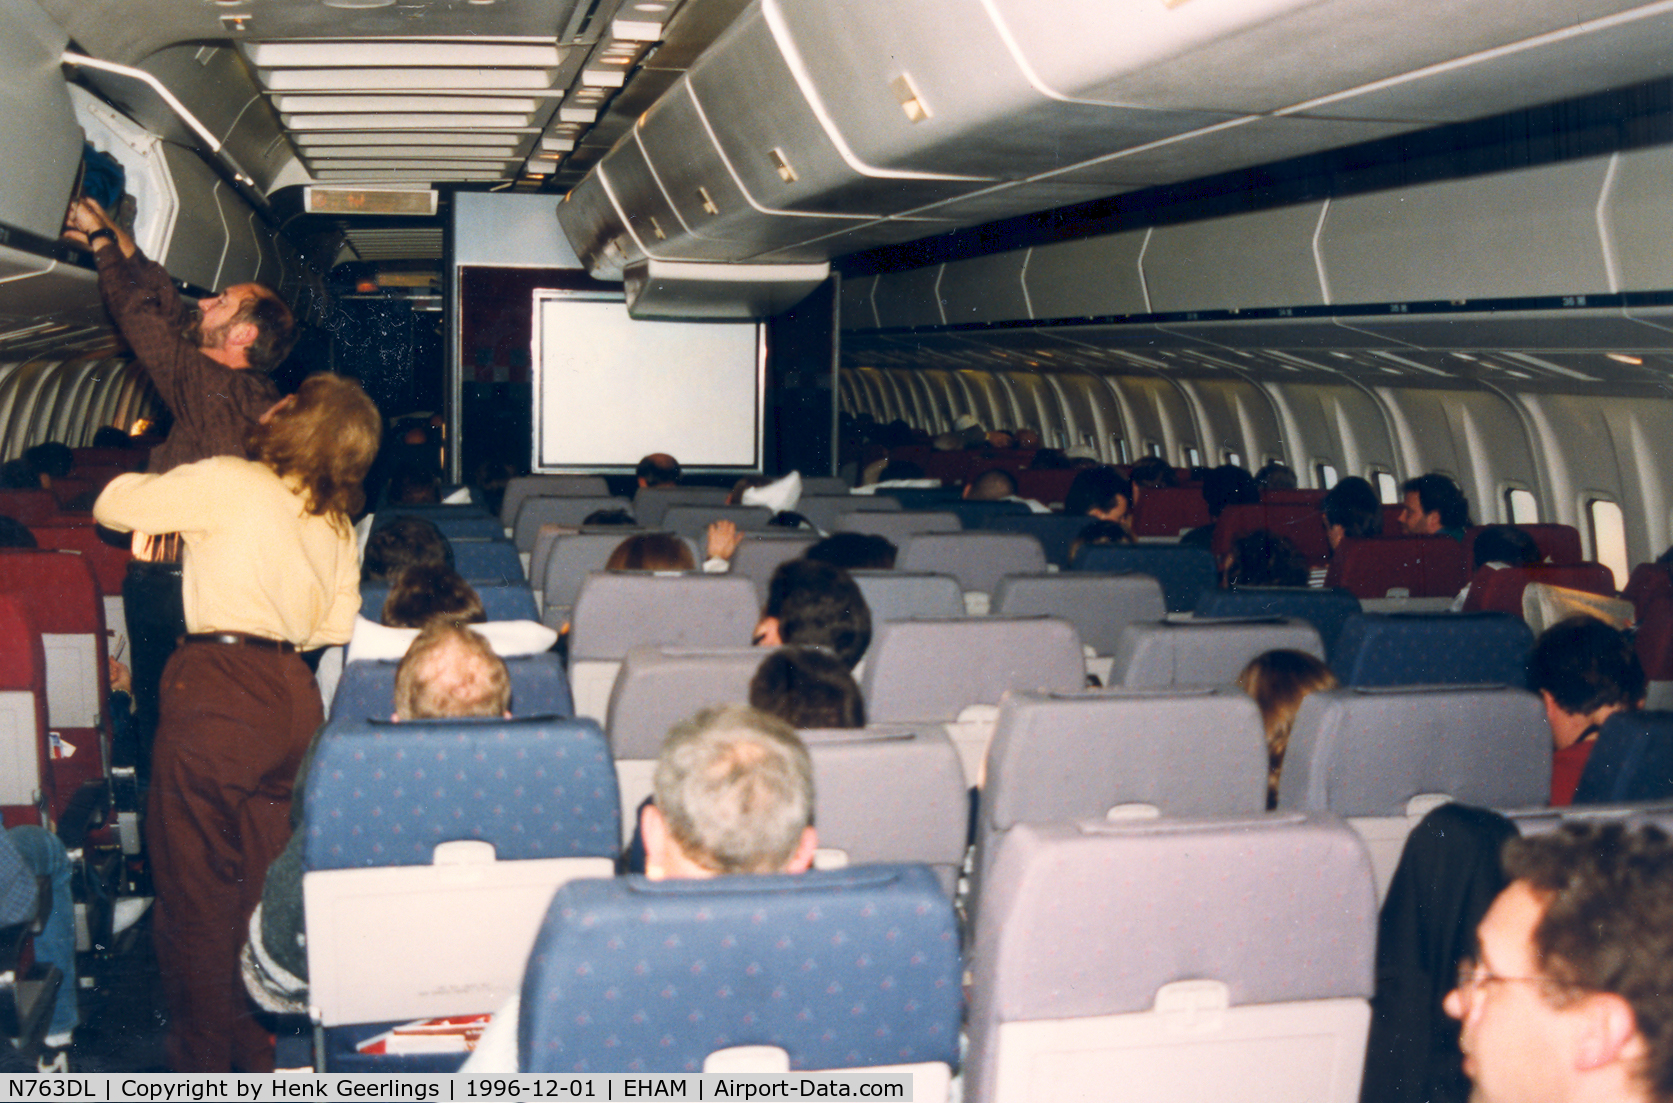 N763DL, 1979 Lockheed L-1011-385-3 TriStar 500 C/N 193Y-1197, Delta , o/b N763DL , Economy class AMS - ATL. Flight time 9hr 57 min.